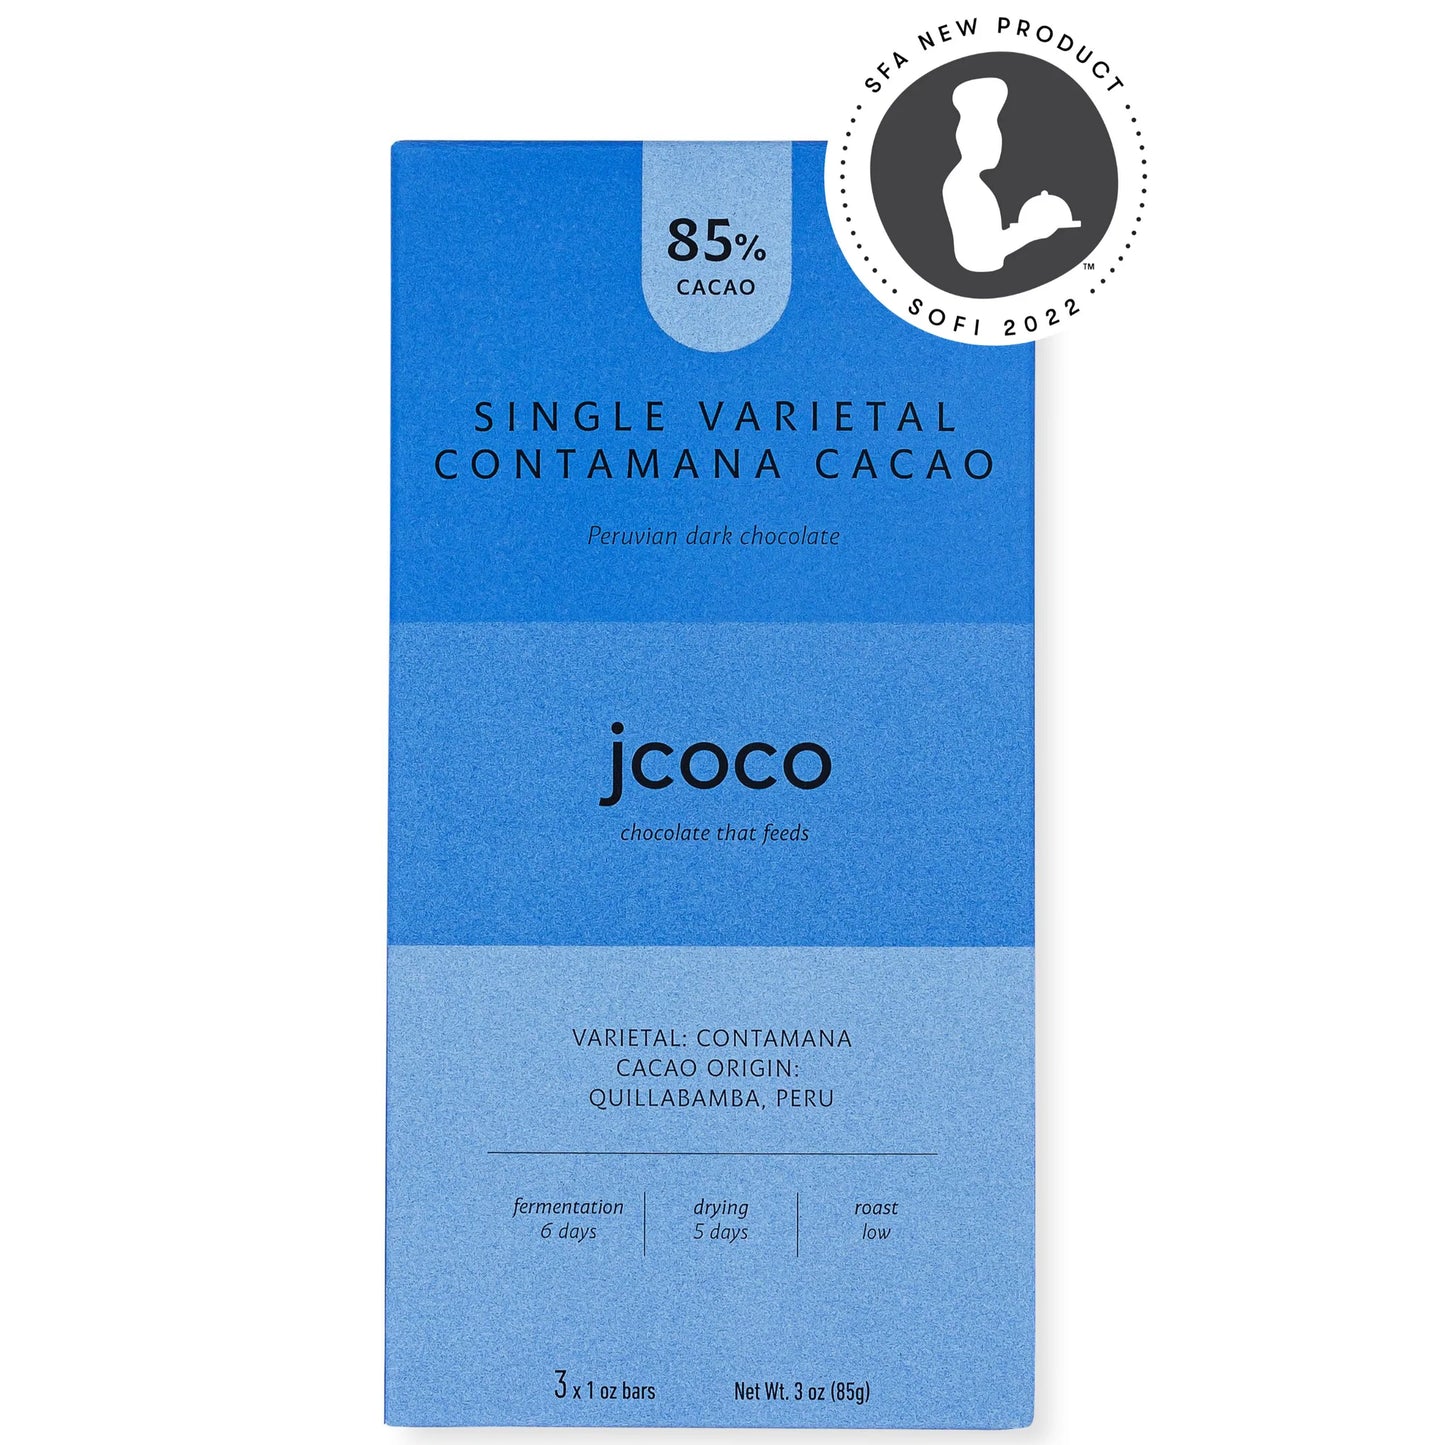 Jcoco chocolate